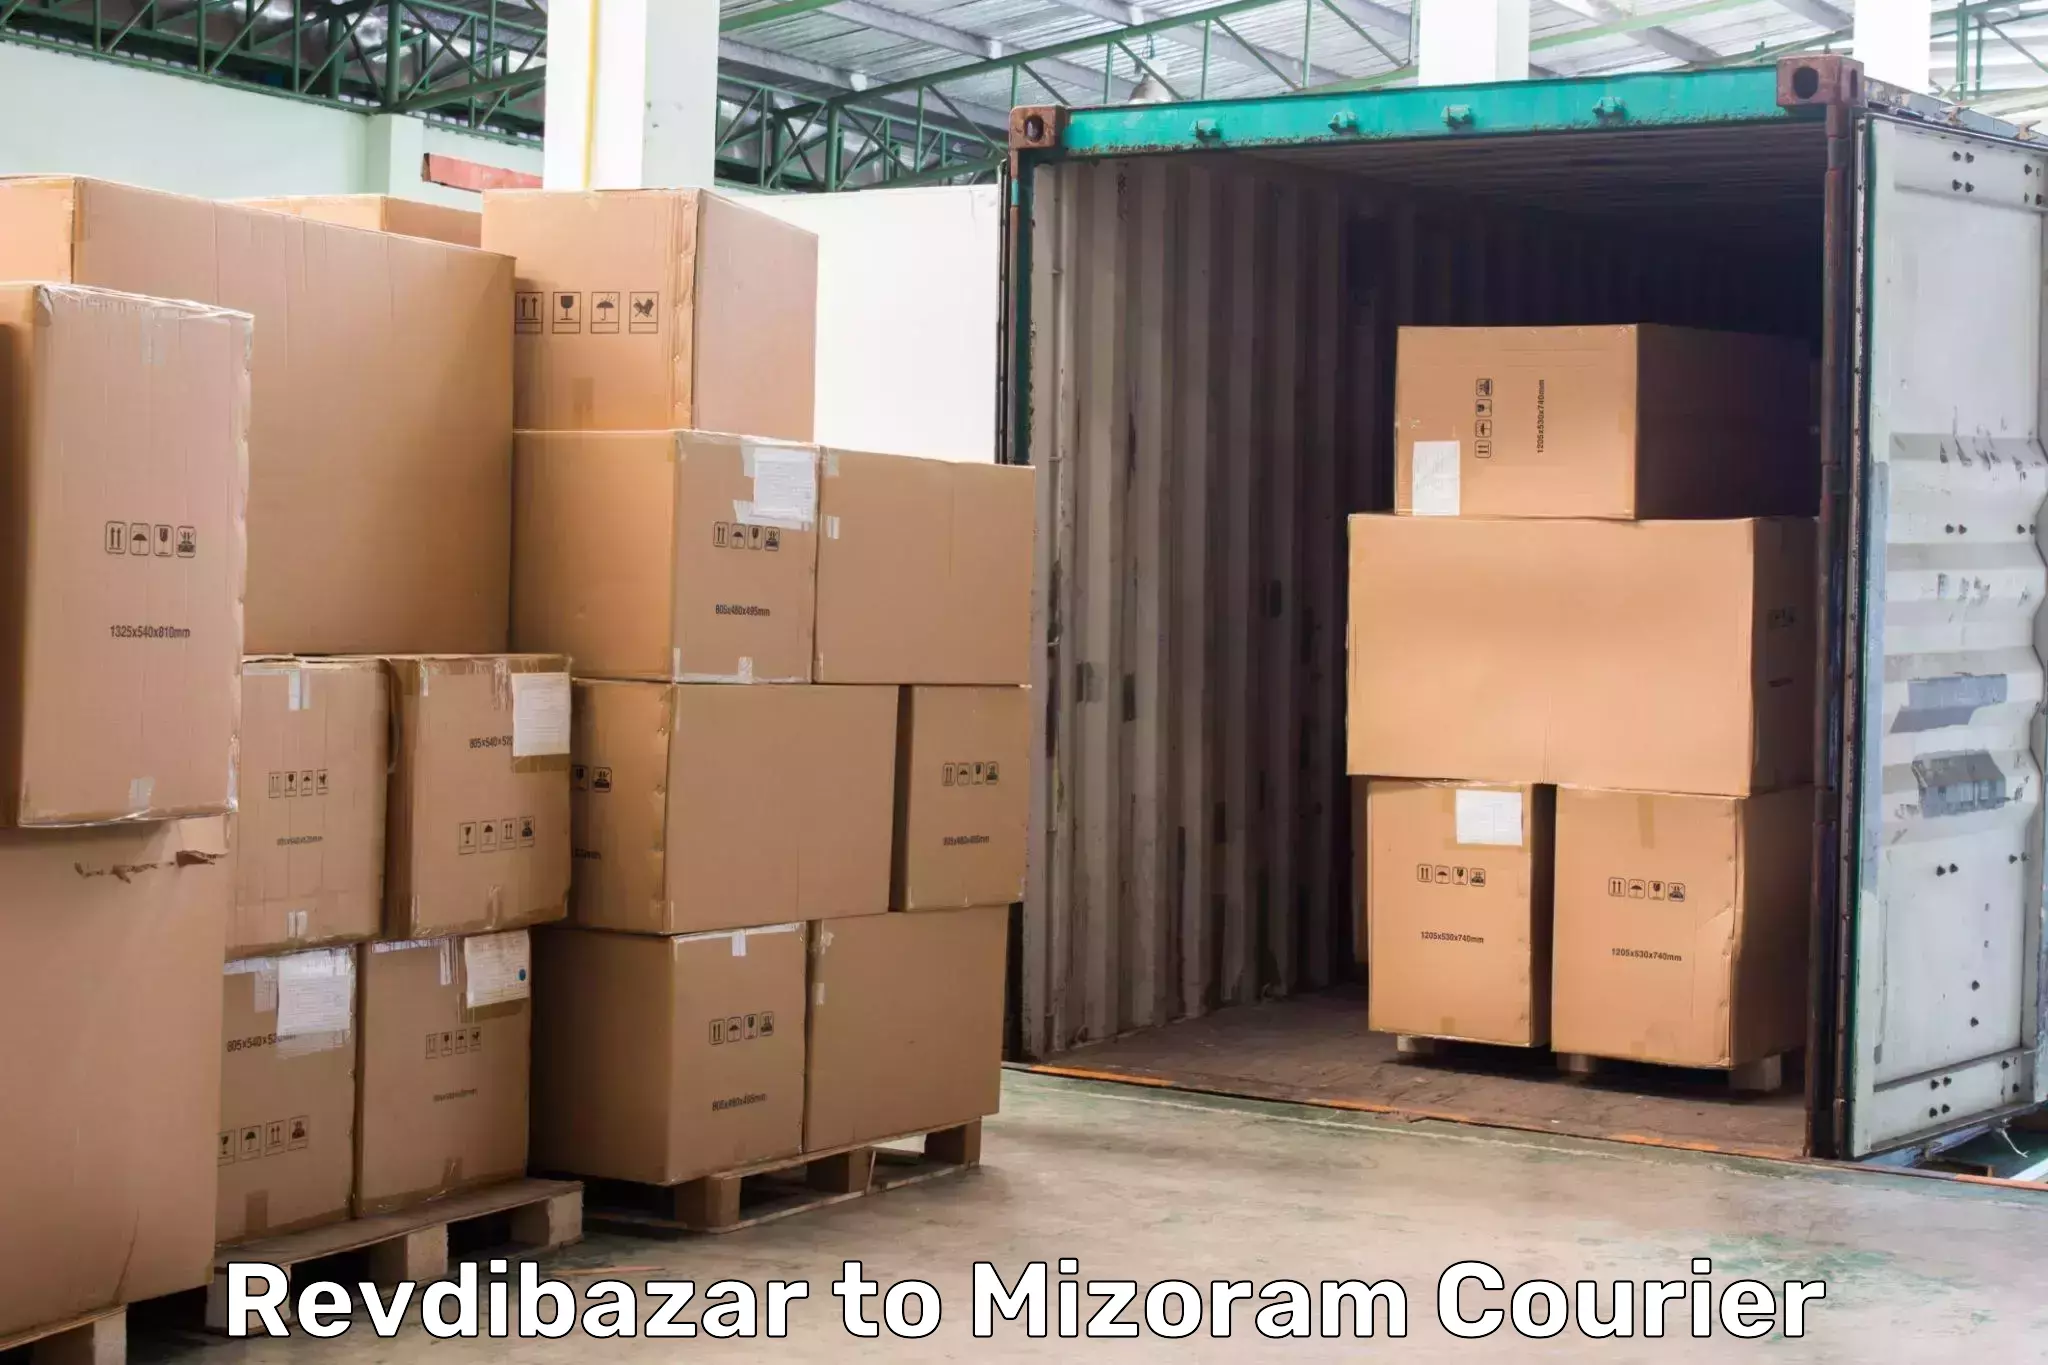 Nationwide courier service Revdibazar to Aizawl